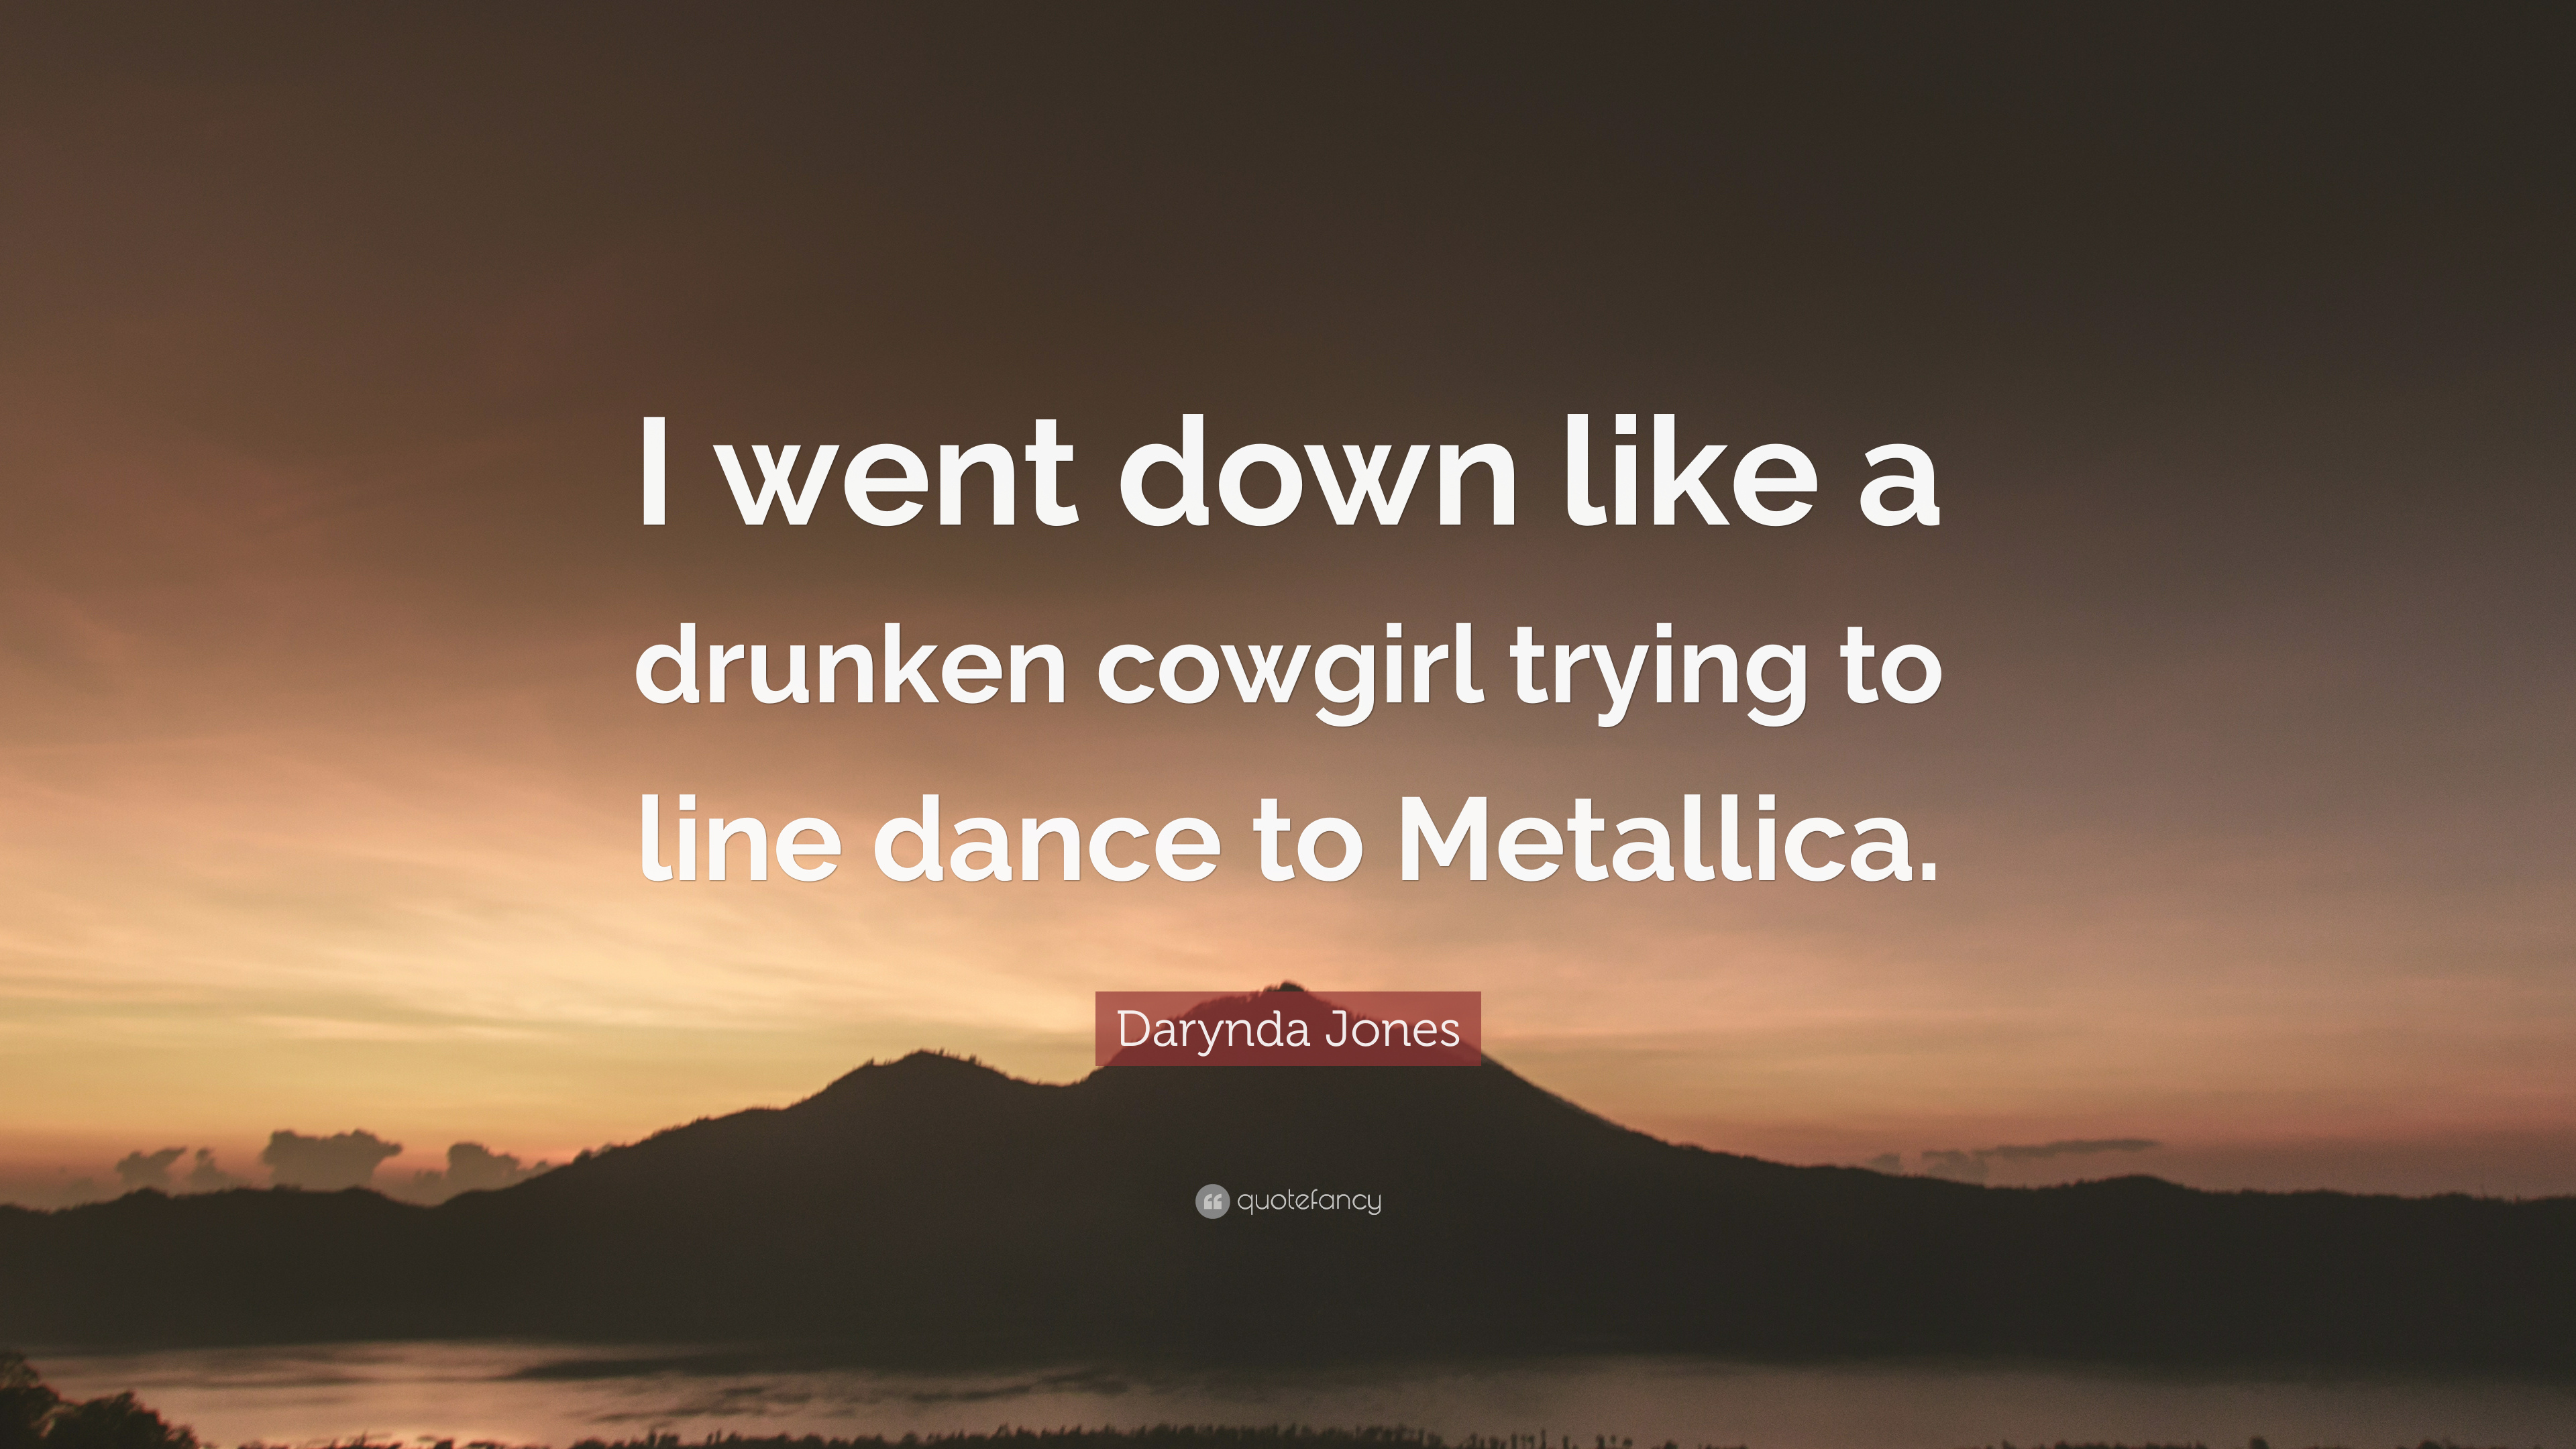 Darynda Jones Quote: “I went down like a drunken cowgirl trying to line dance to Metallica.”